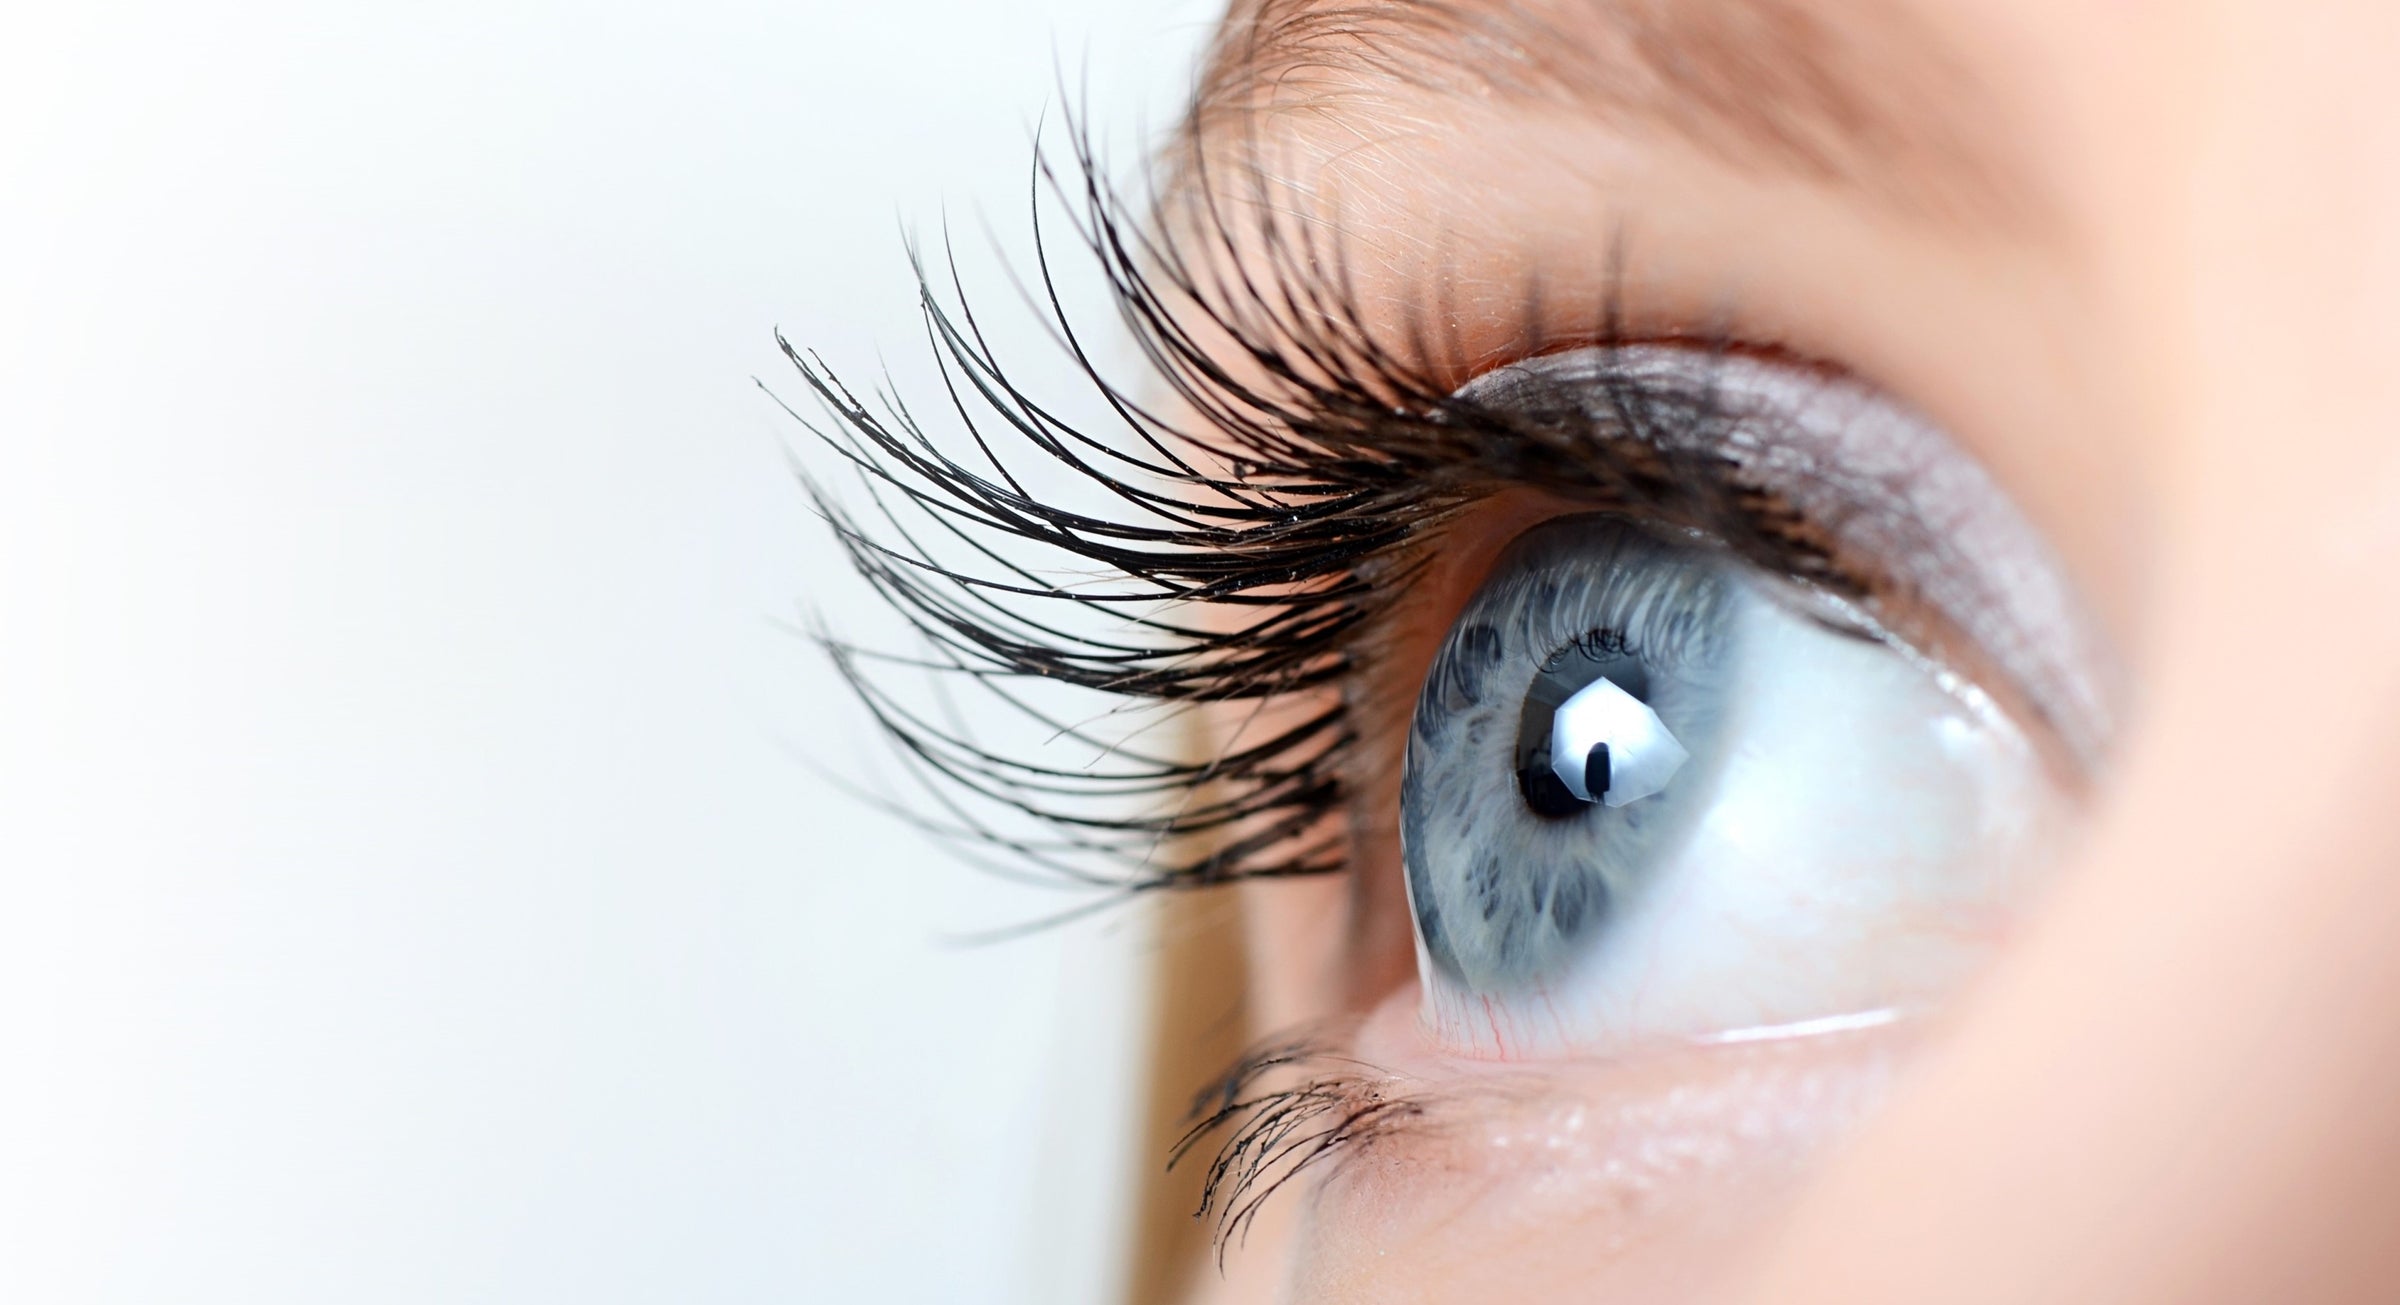 dermaworks spectaculash eye lash growth serum in just weeks fuller thicker longer lashes fast castor oil alternative to false lashes